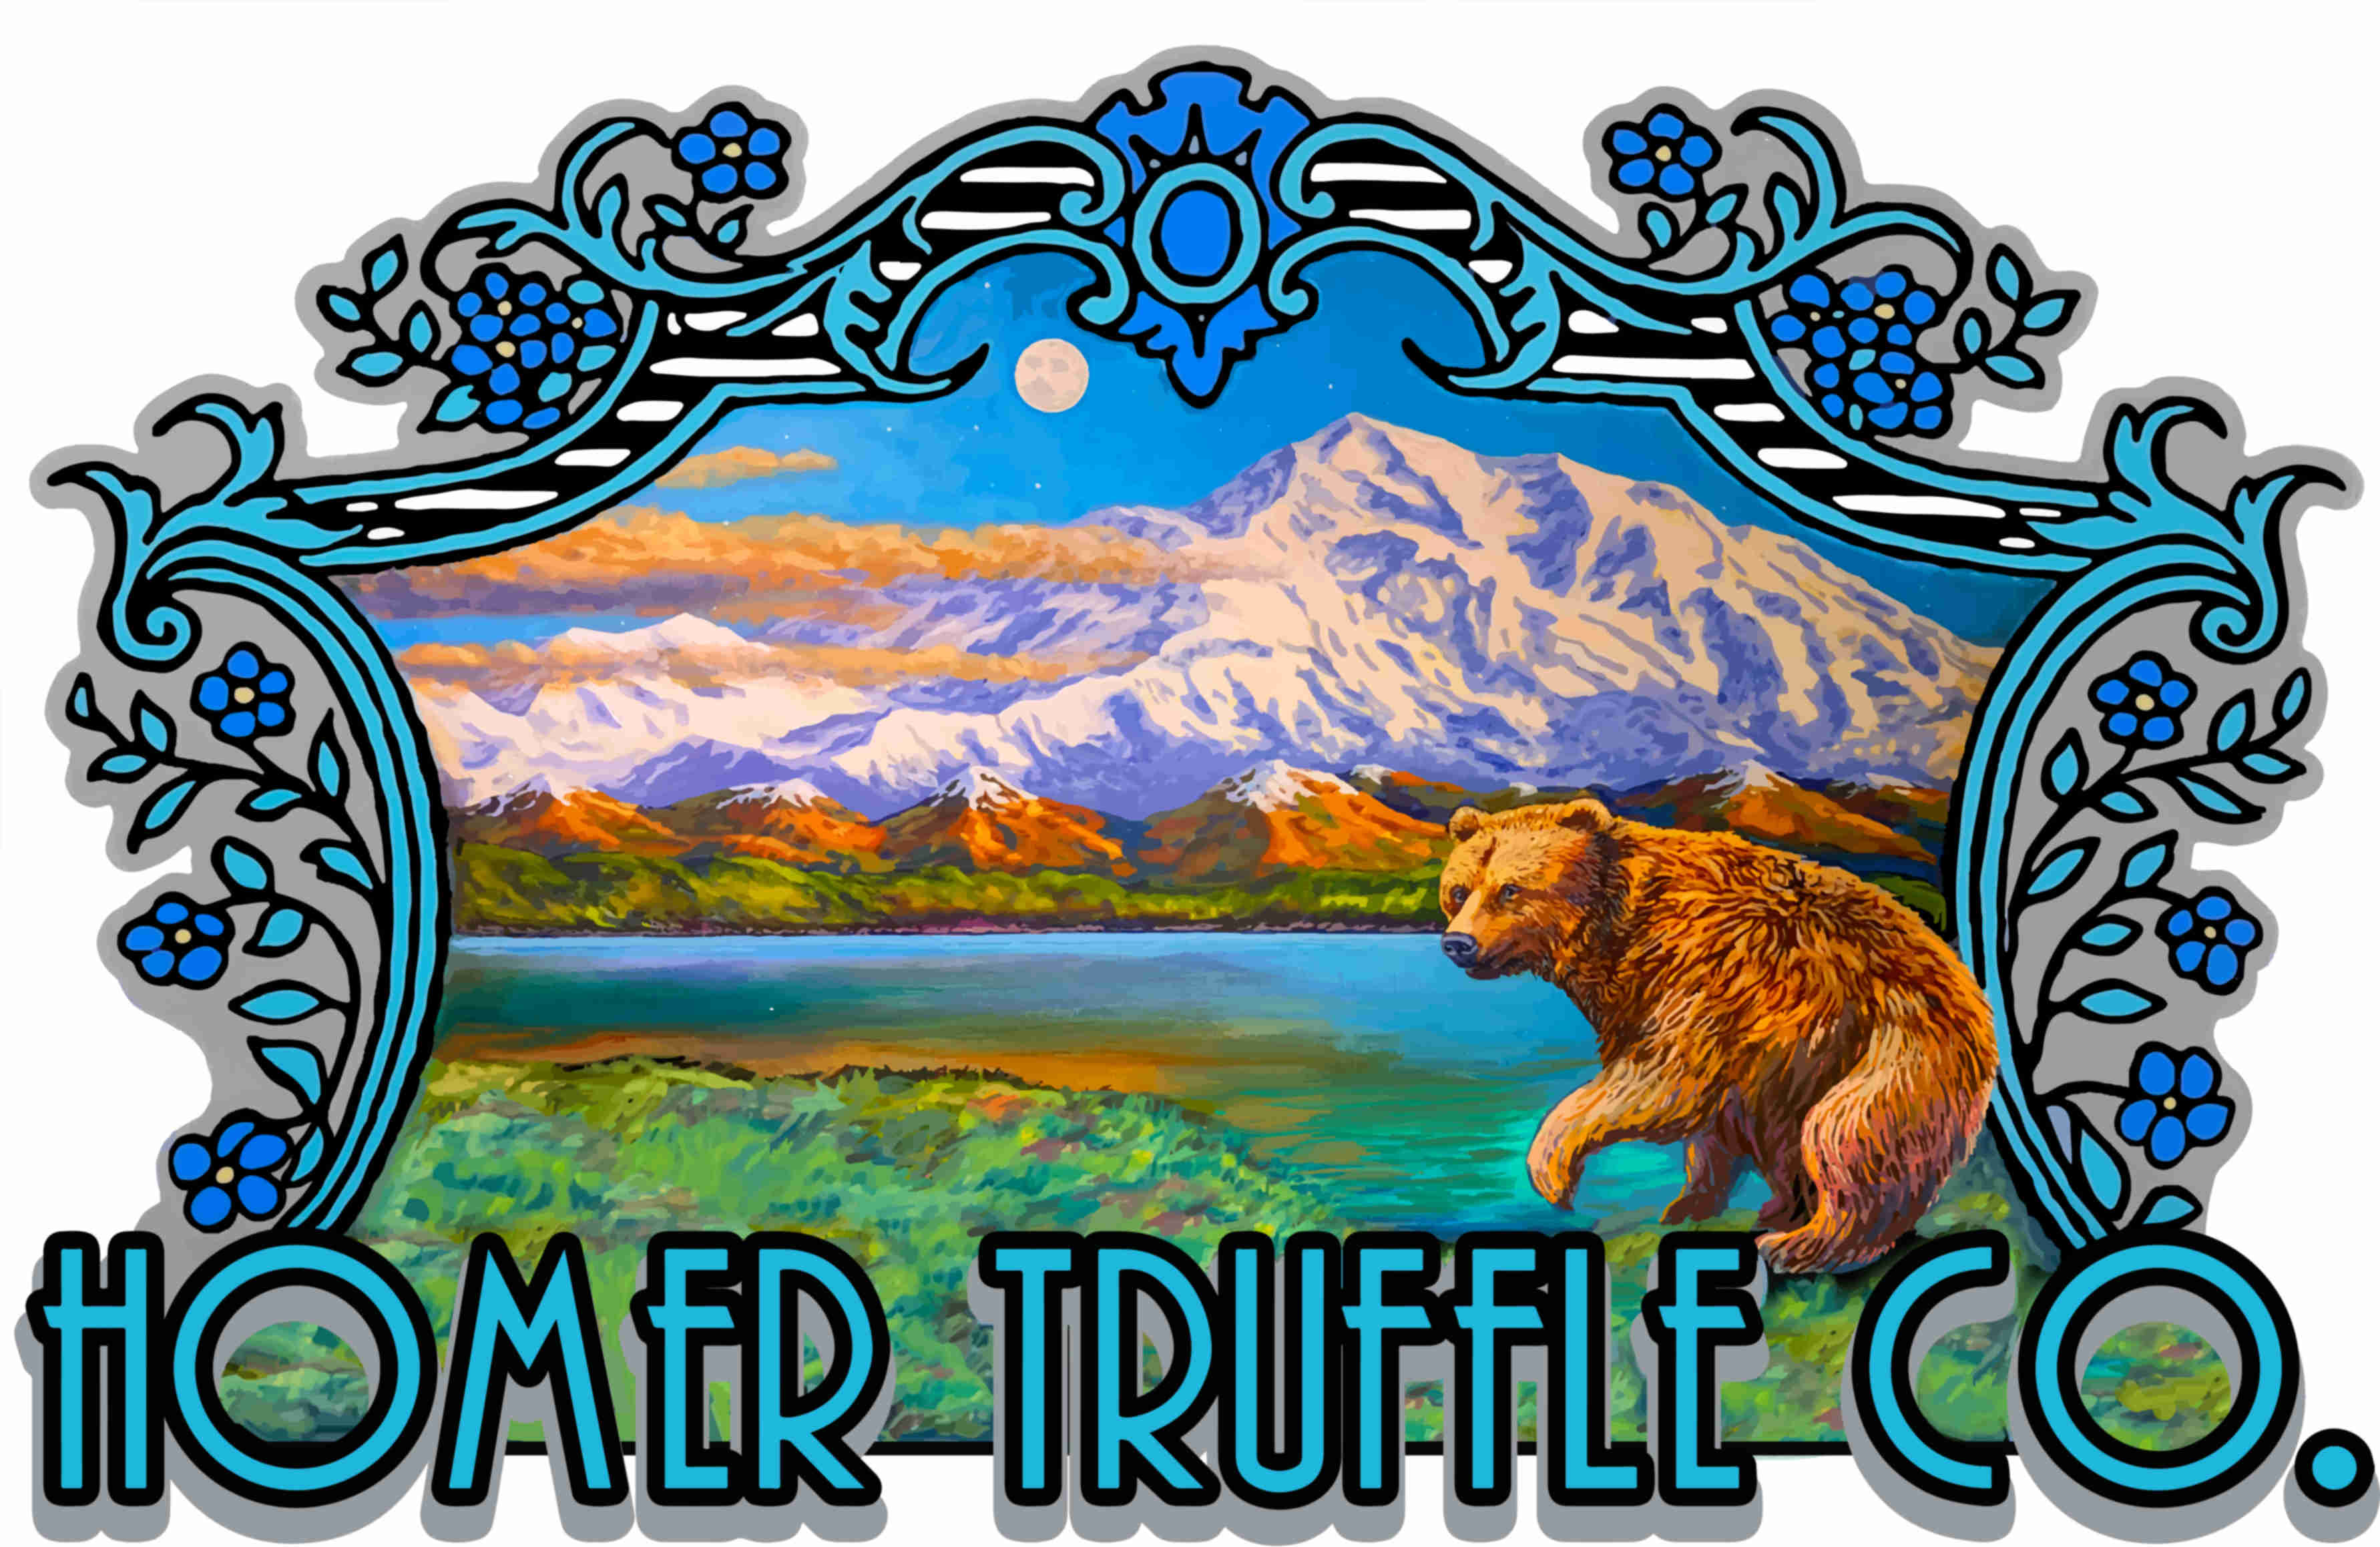 Homer Truffle Co Logo